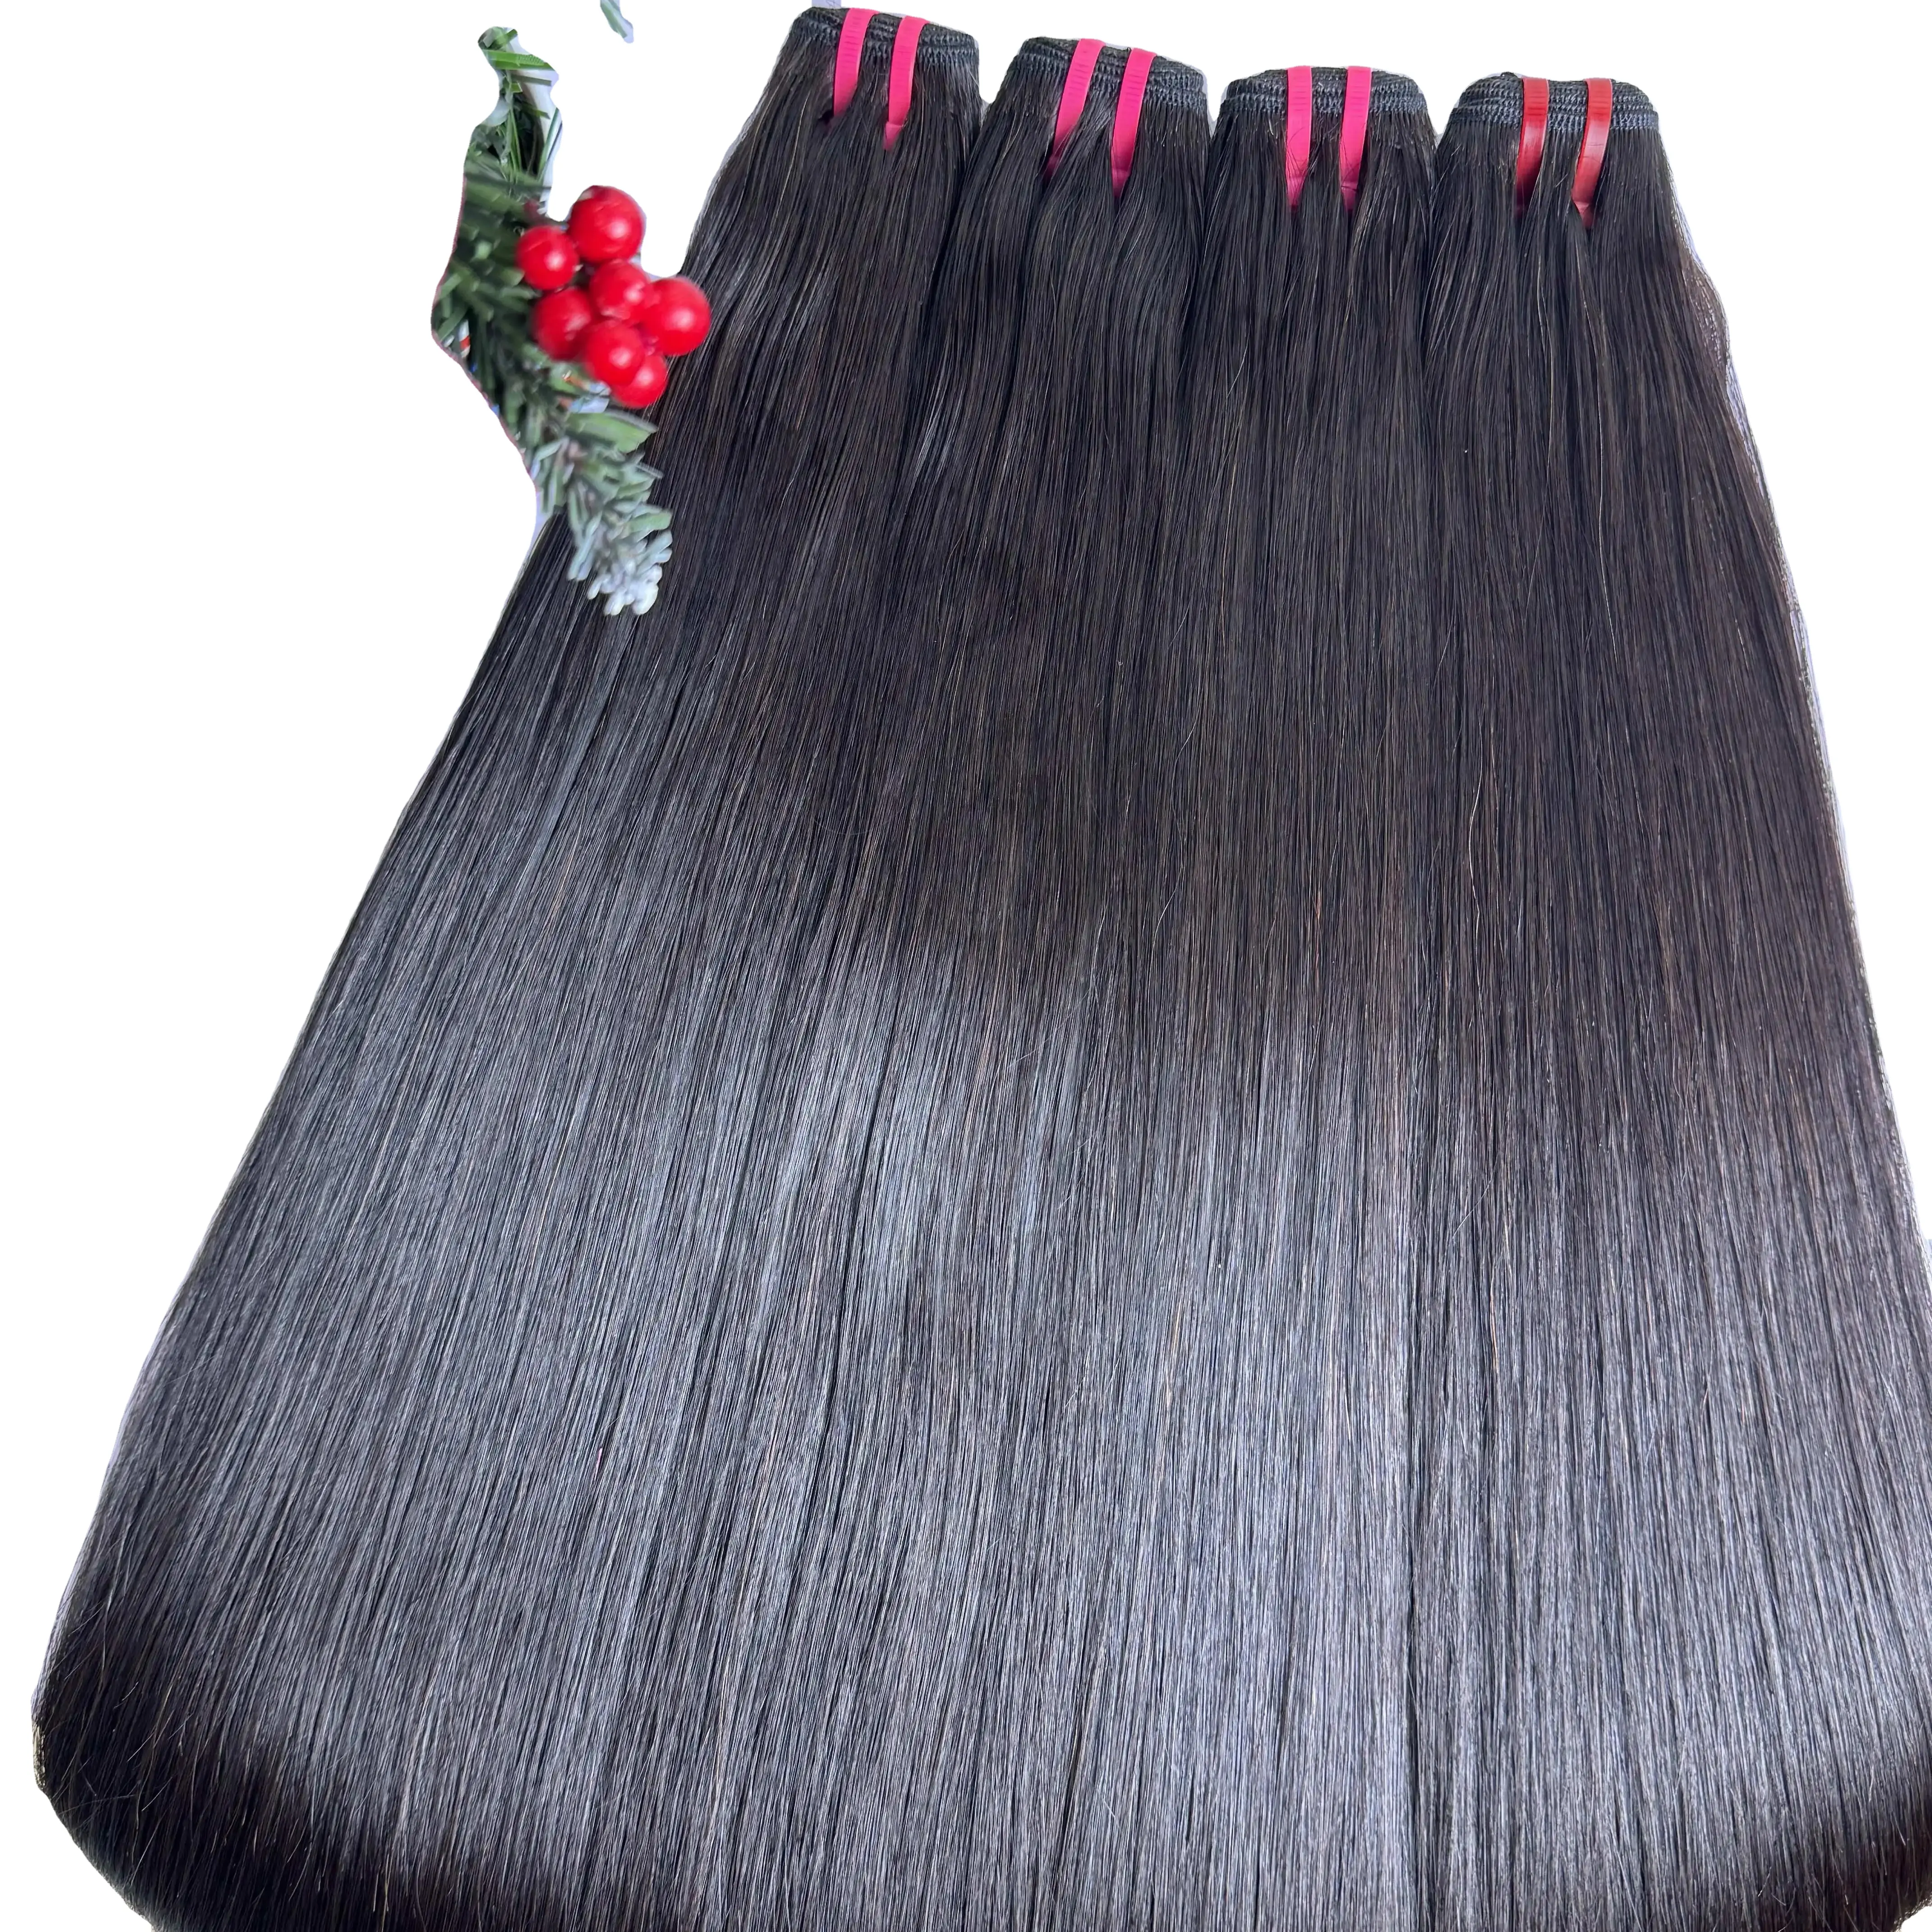 Hoge Kwaliteit Haar Vietnamese Haar Echte Remy Human Hair Inslag Extensions Voor Groothandel Fabriek